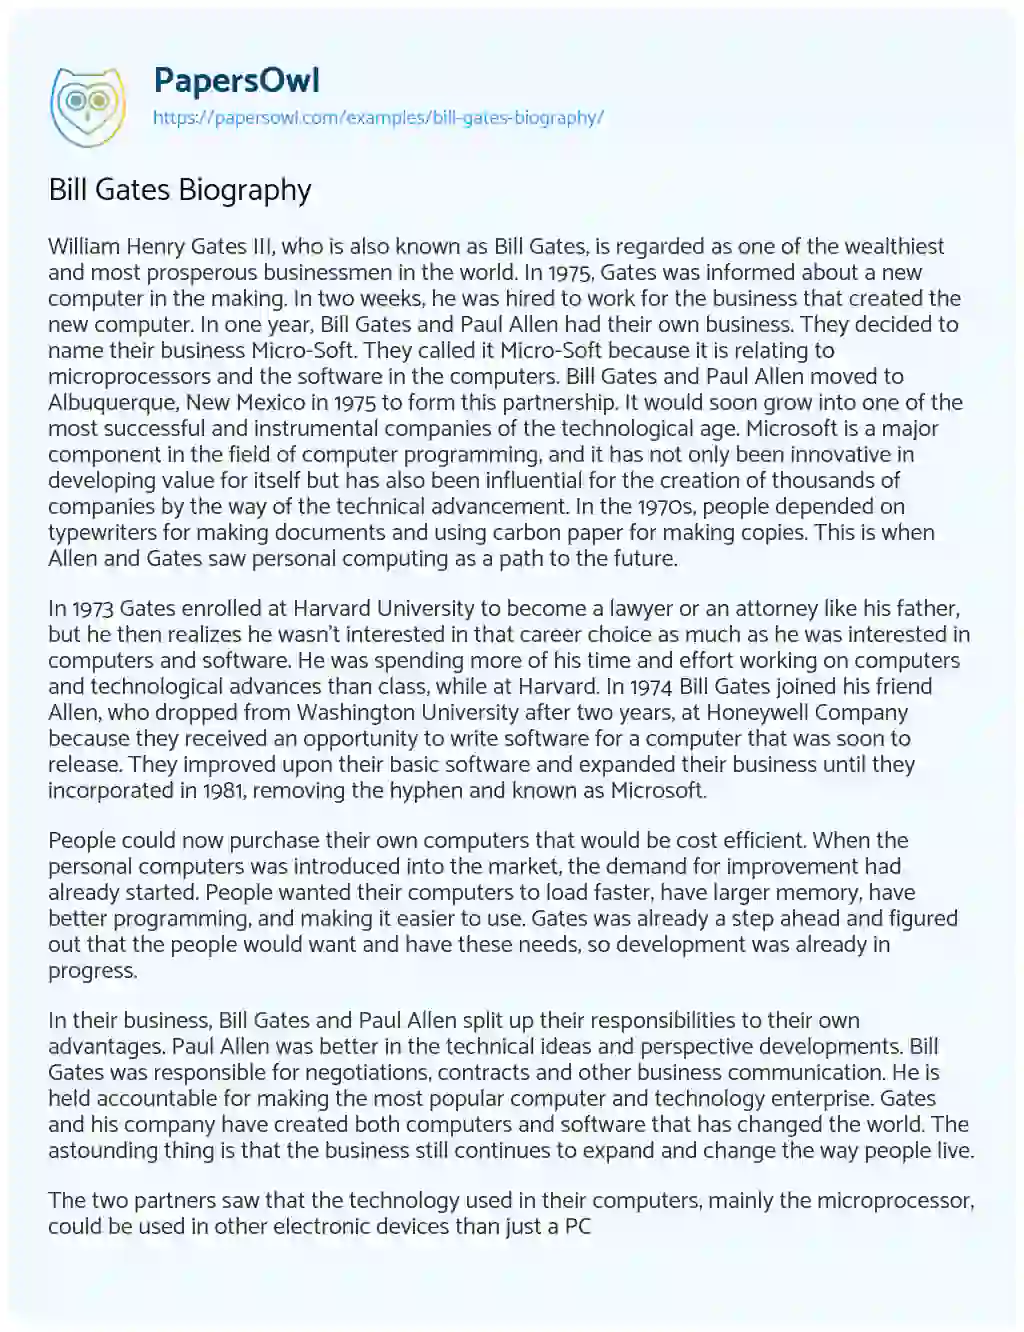 Essay on Bill Gates Biography